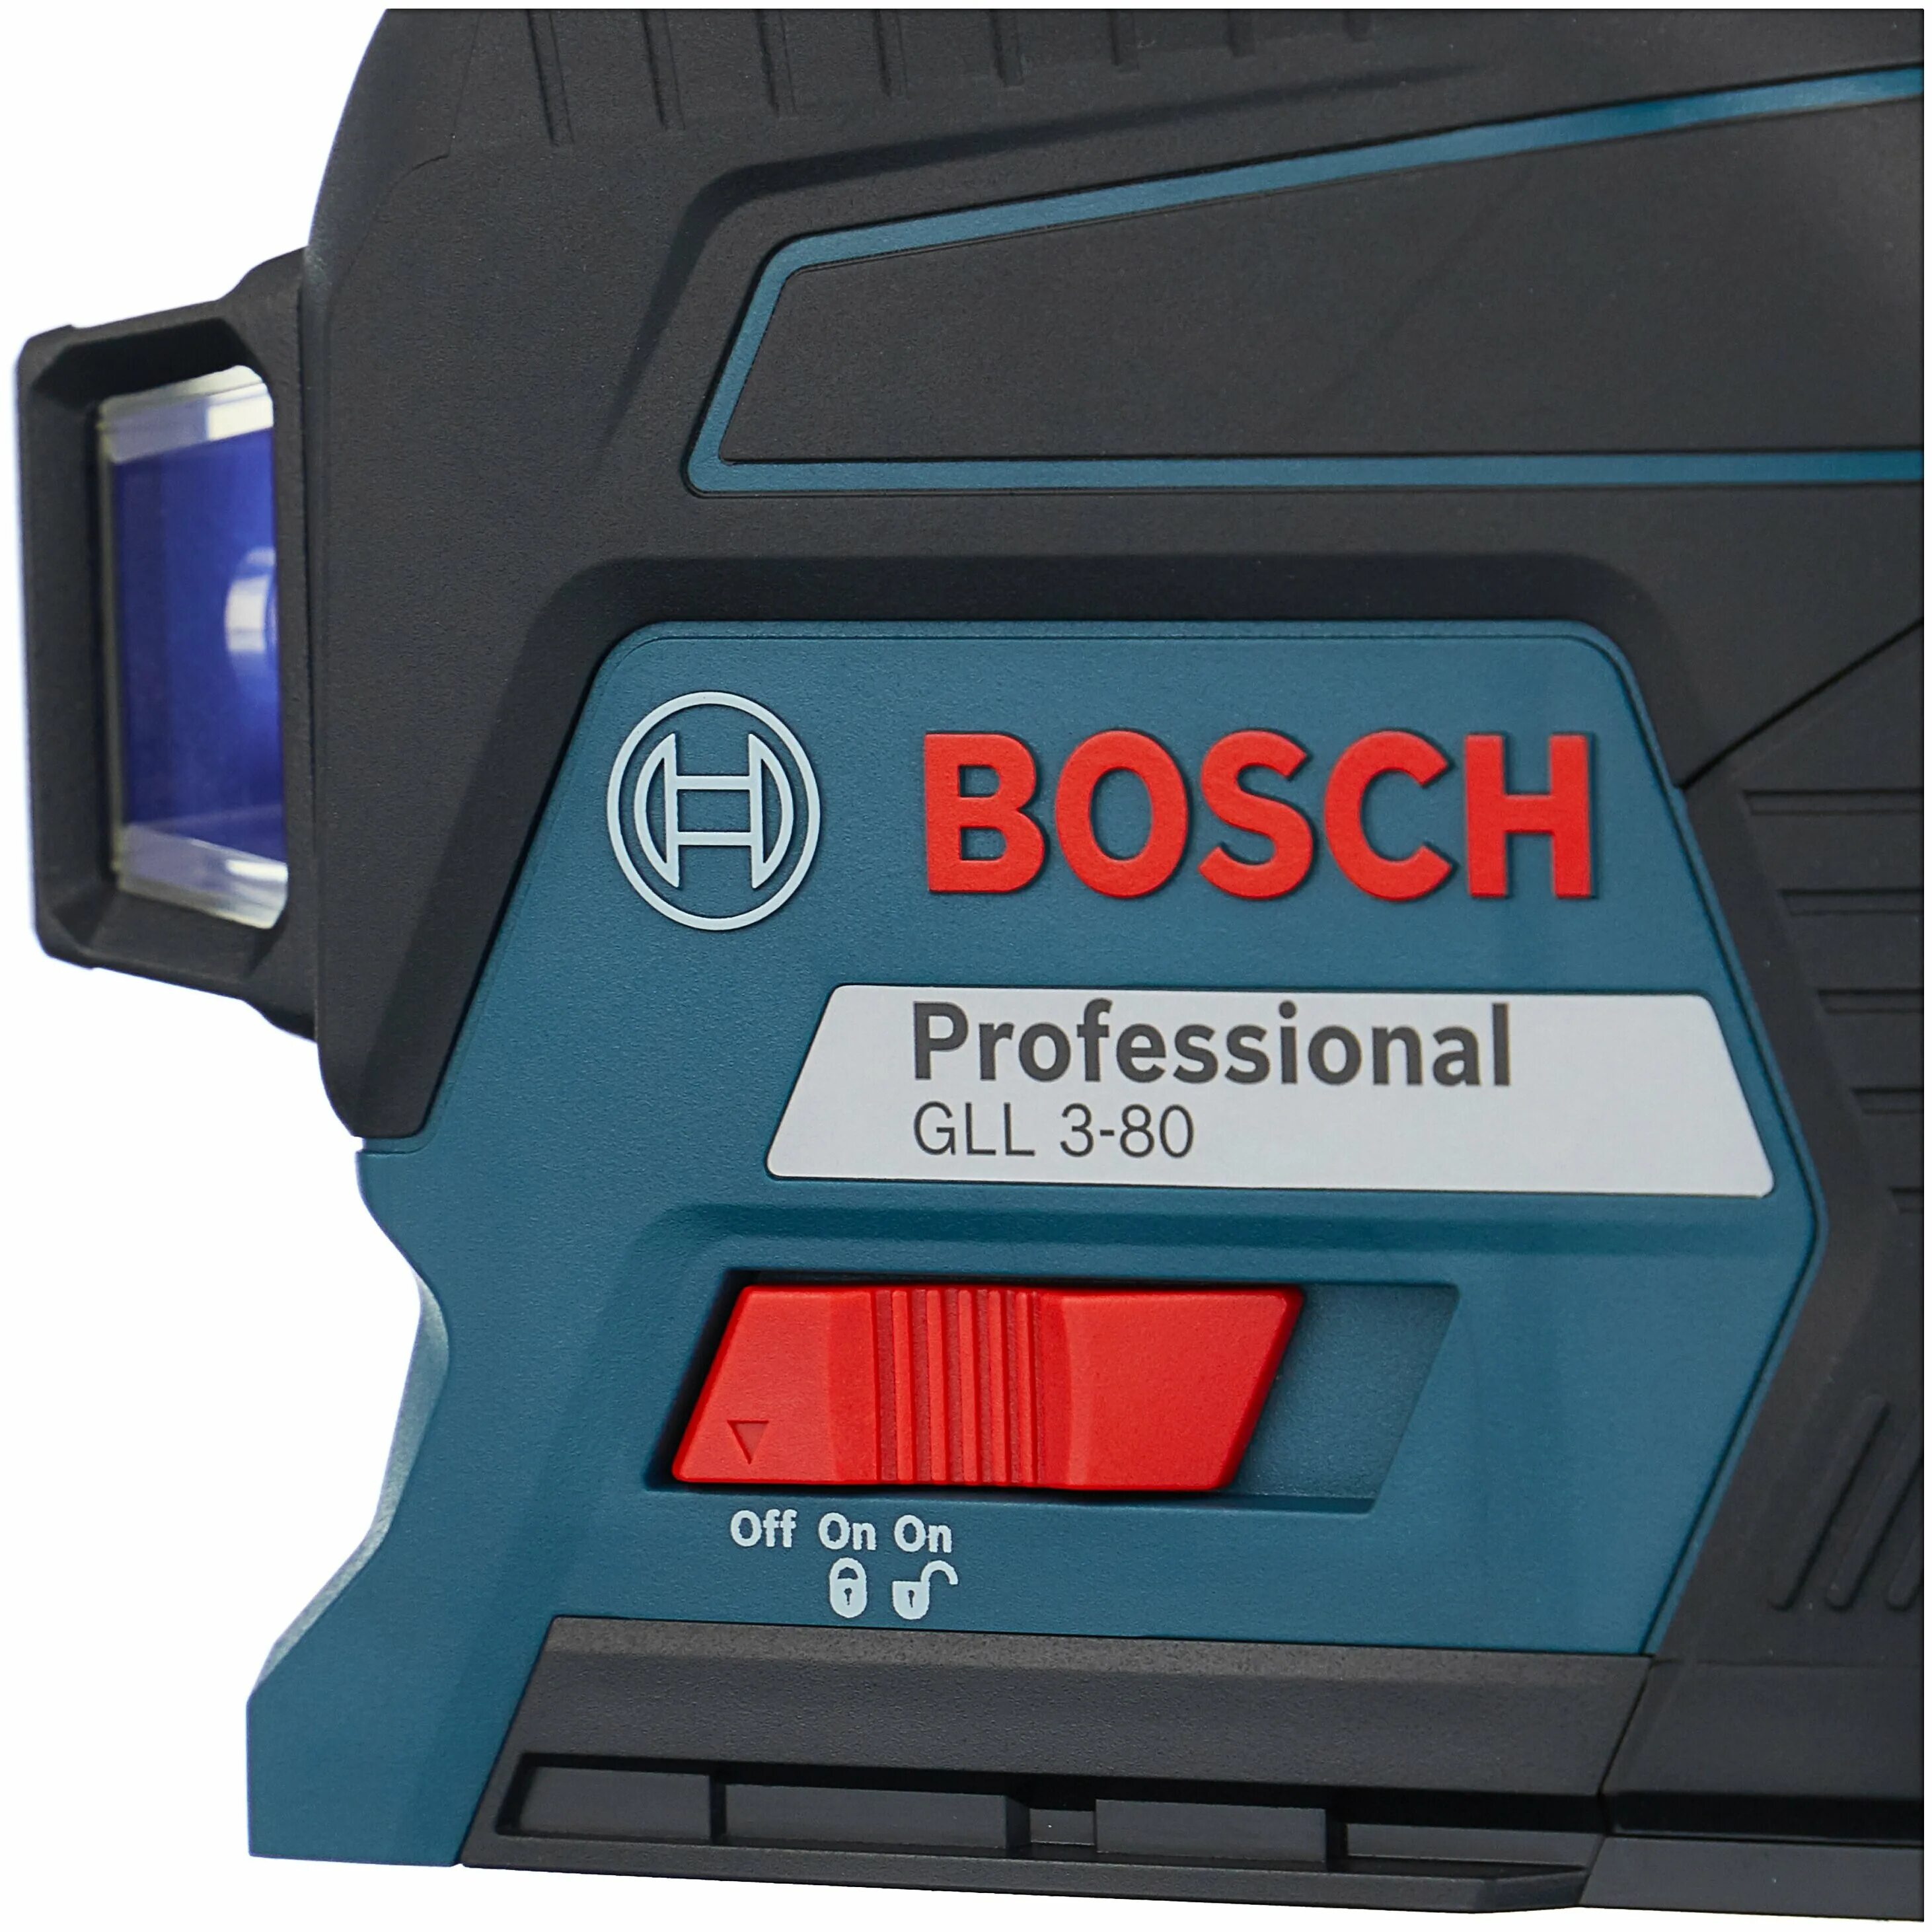 Уровень gll 3 80. Уровень бош GLL 3-80. Bosch GLL 3-80 professional 0601063s00. Лазер бош GLL 3-80. Лазерный нивелир GLL 3-80 professional.